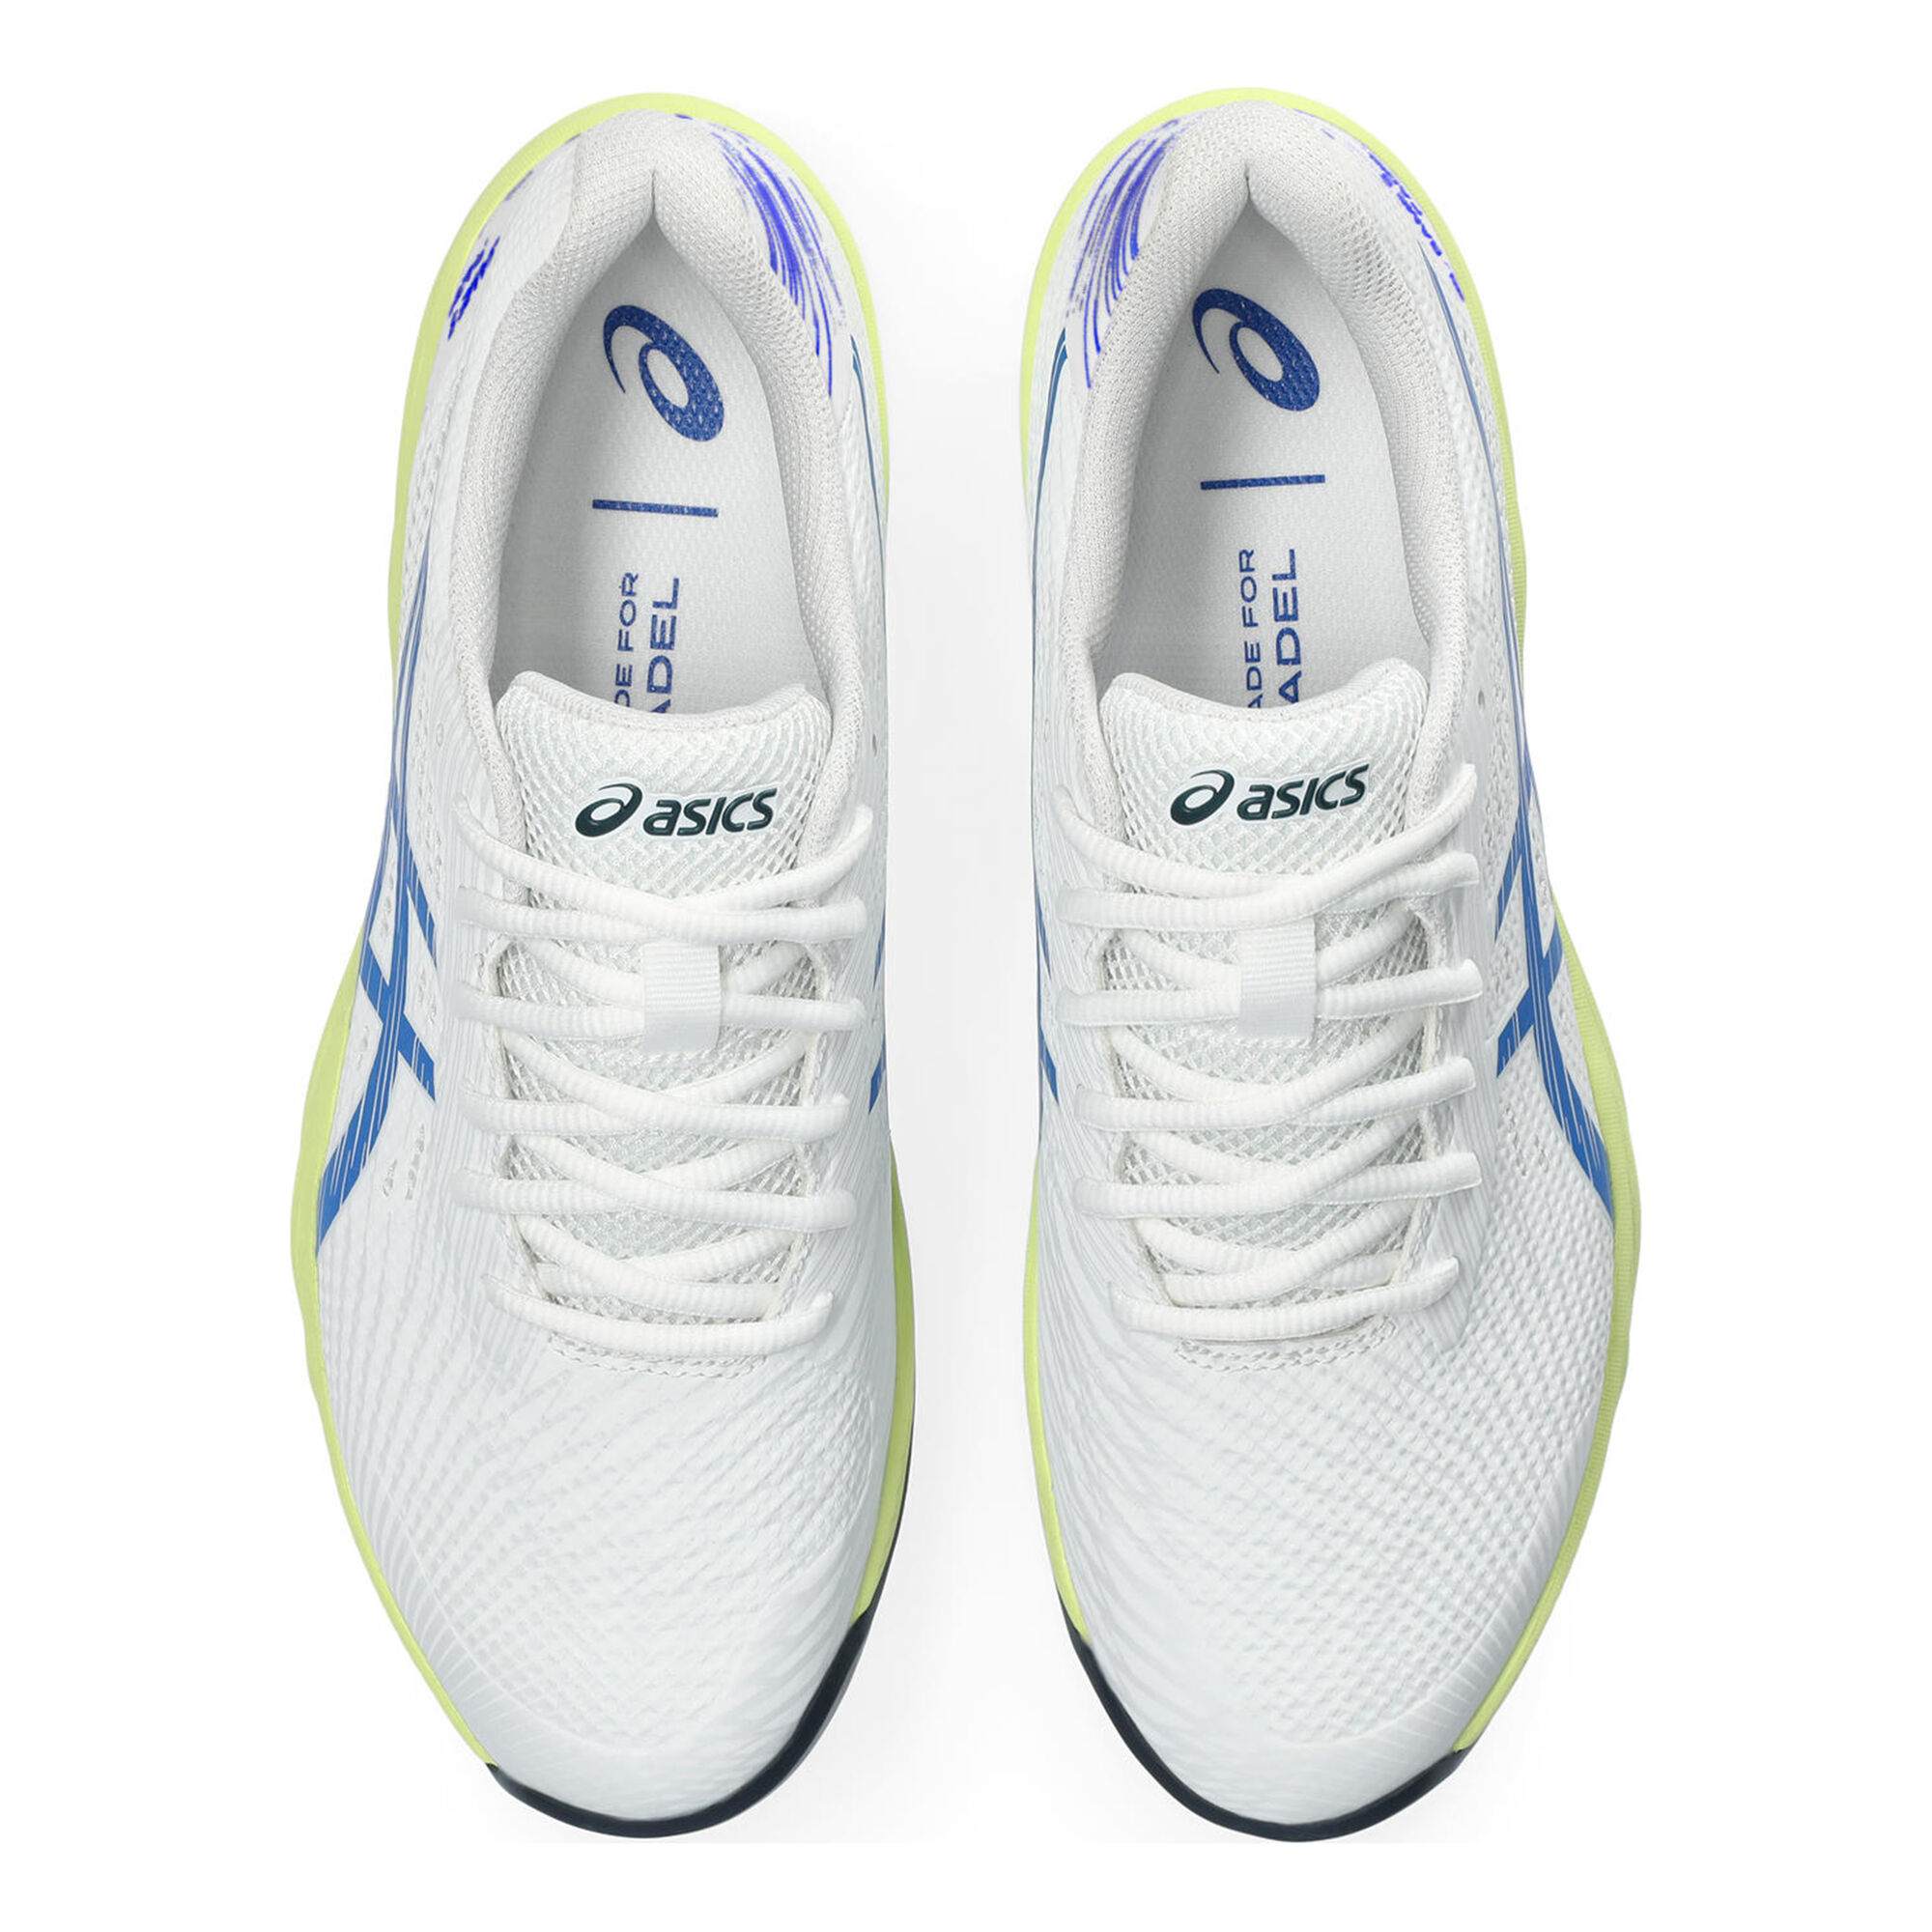 Chaussures Asics Gel Game 9 Homme Blanc/Bleu - Sports Raquettes